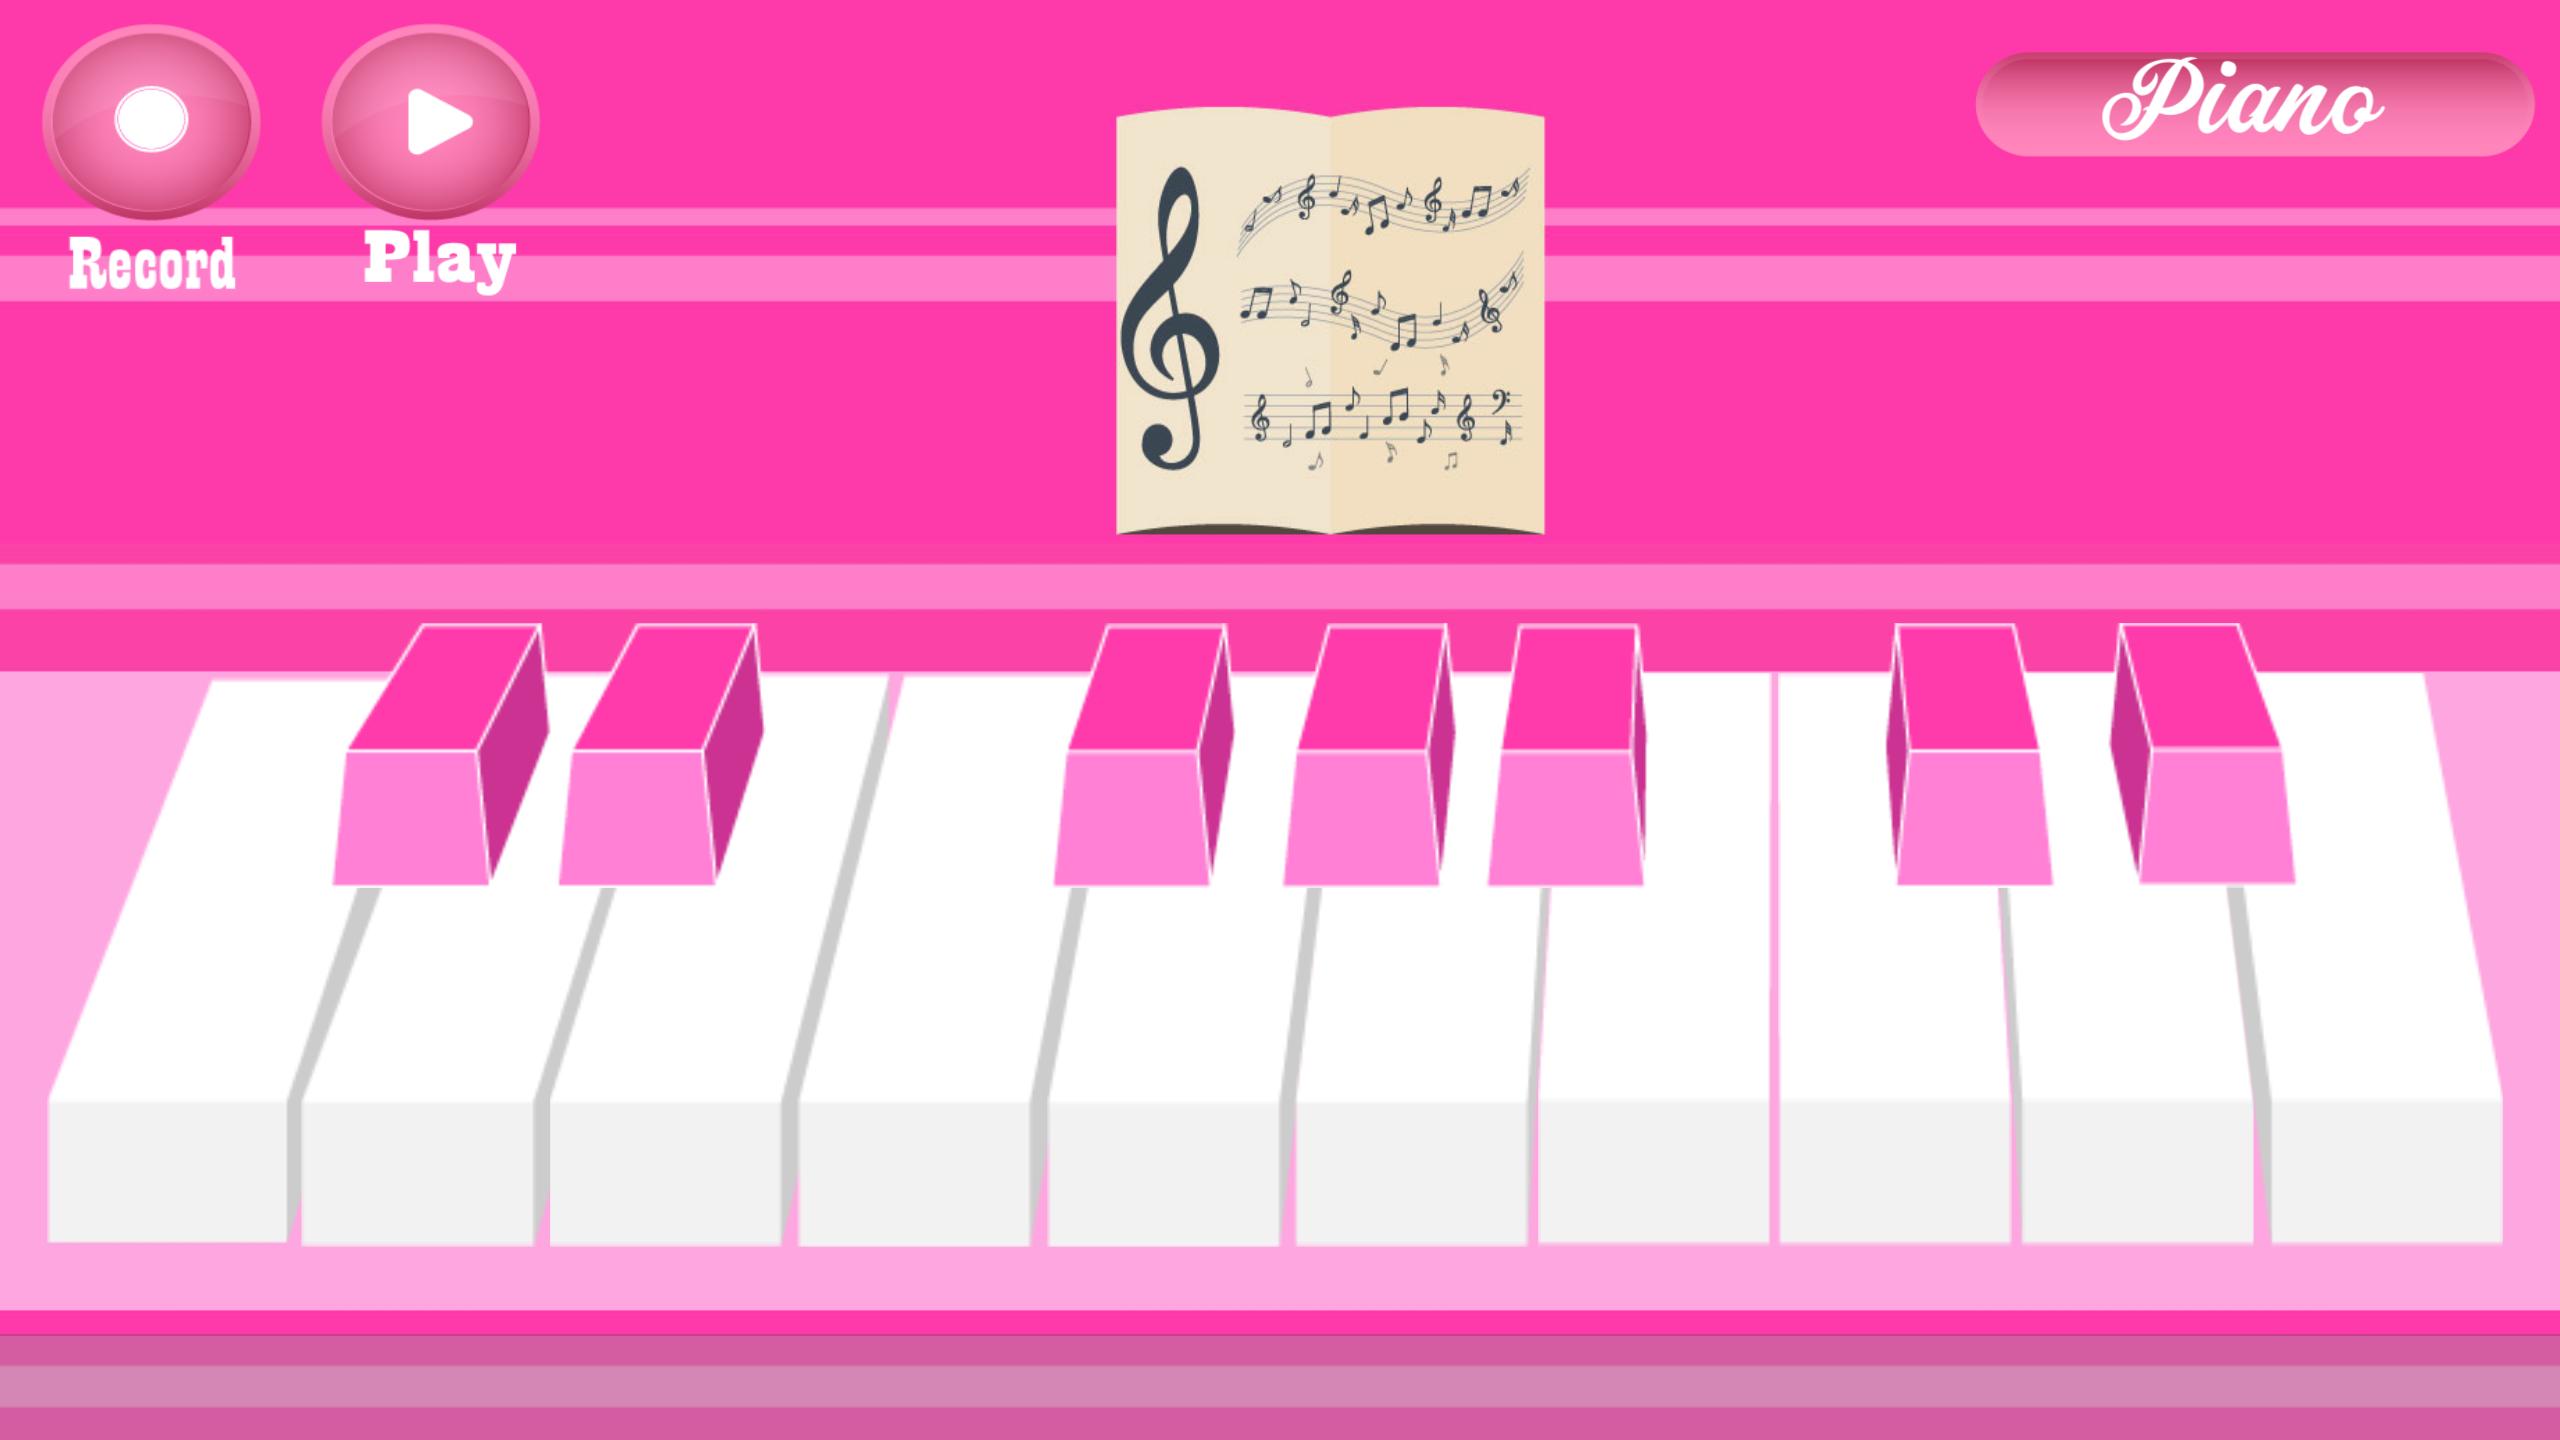 Игра фортепиано 1. Игра на пианино. Пианино, розовое. Музыкальное пианино игра. Игра на рояле.